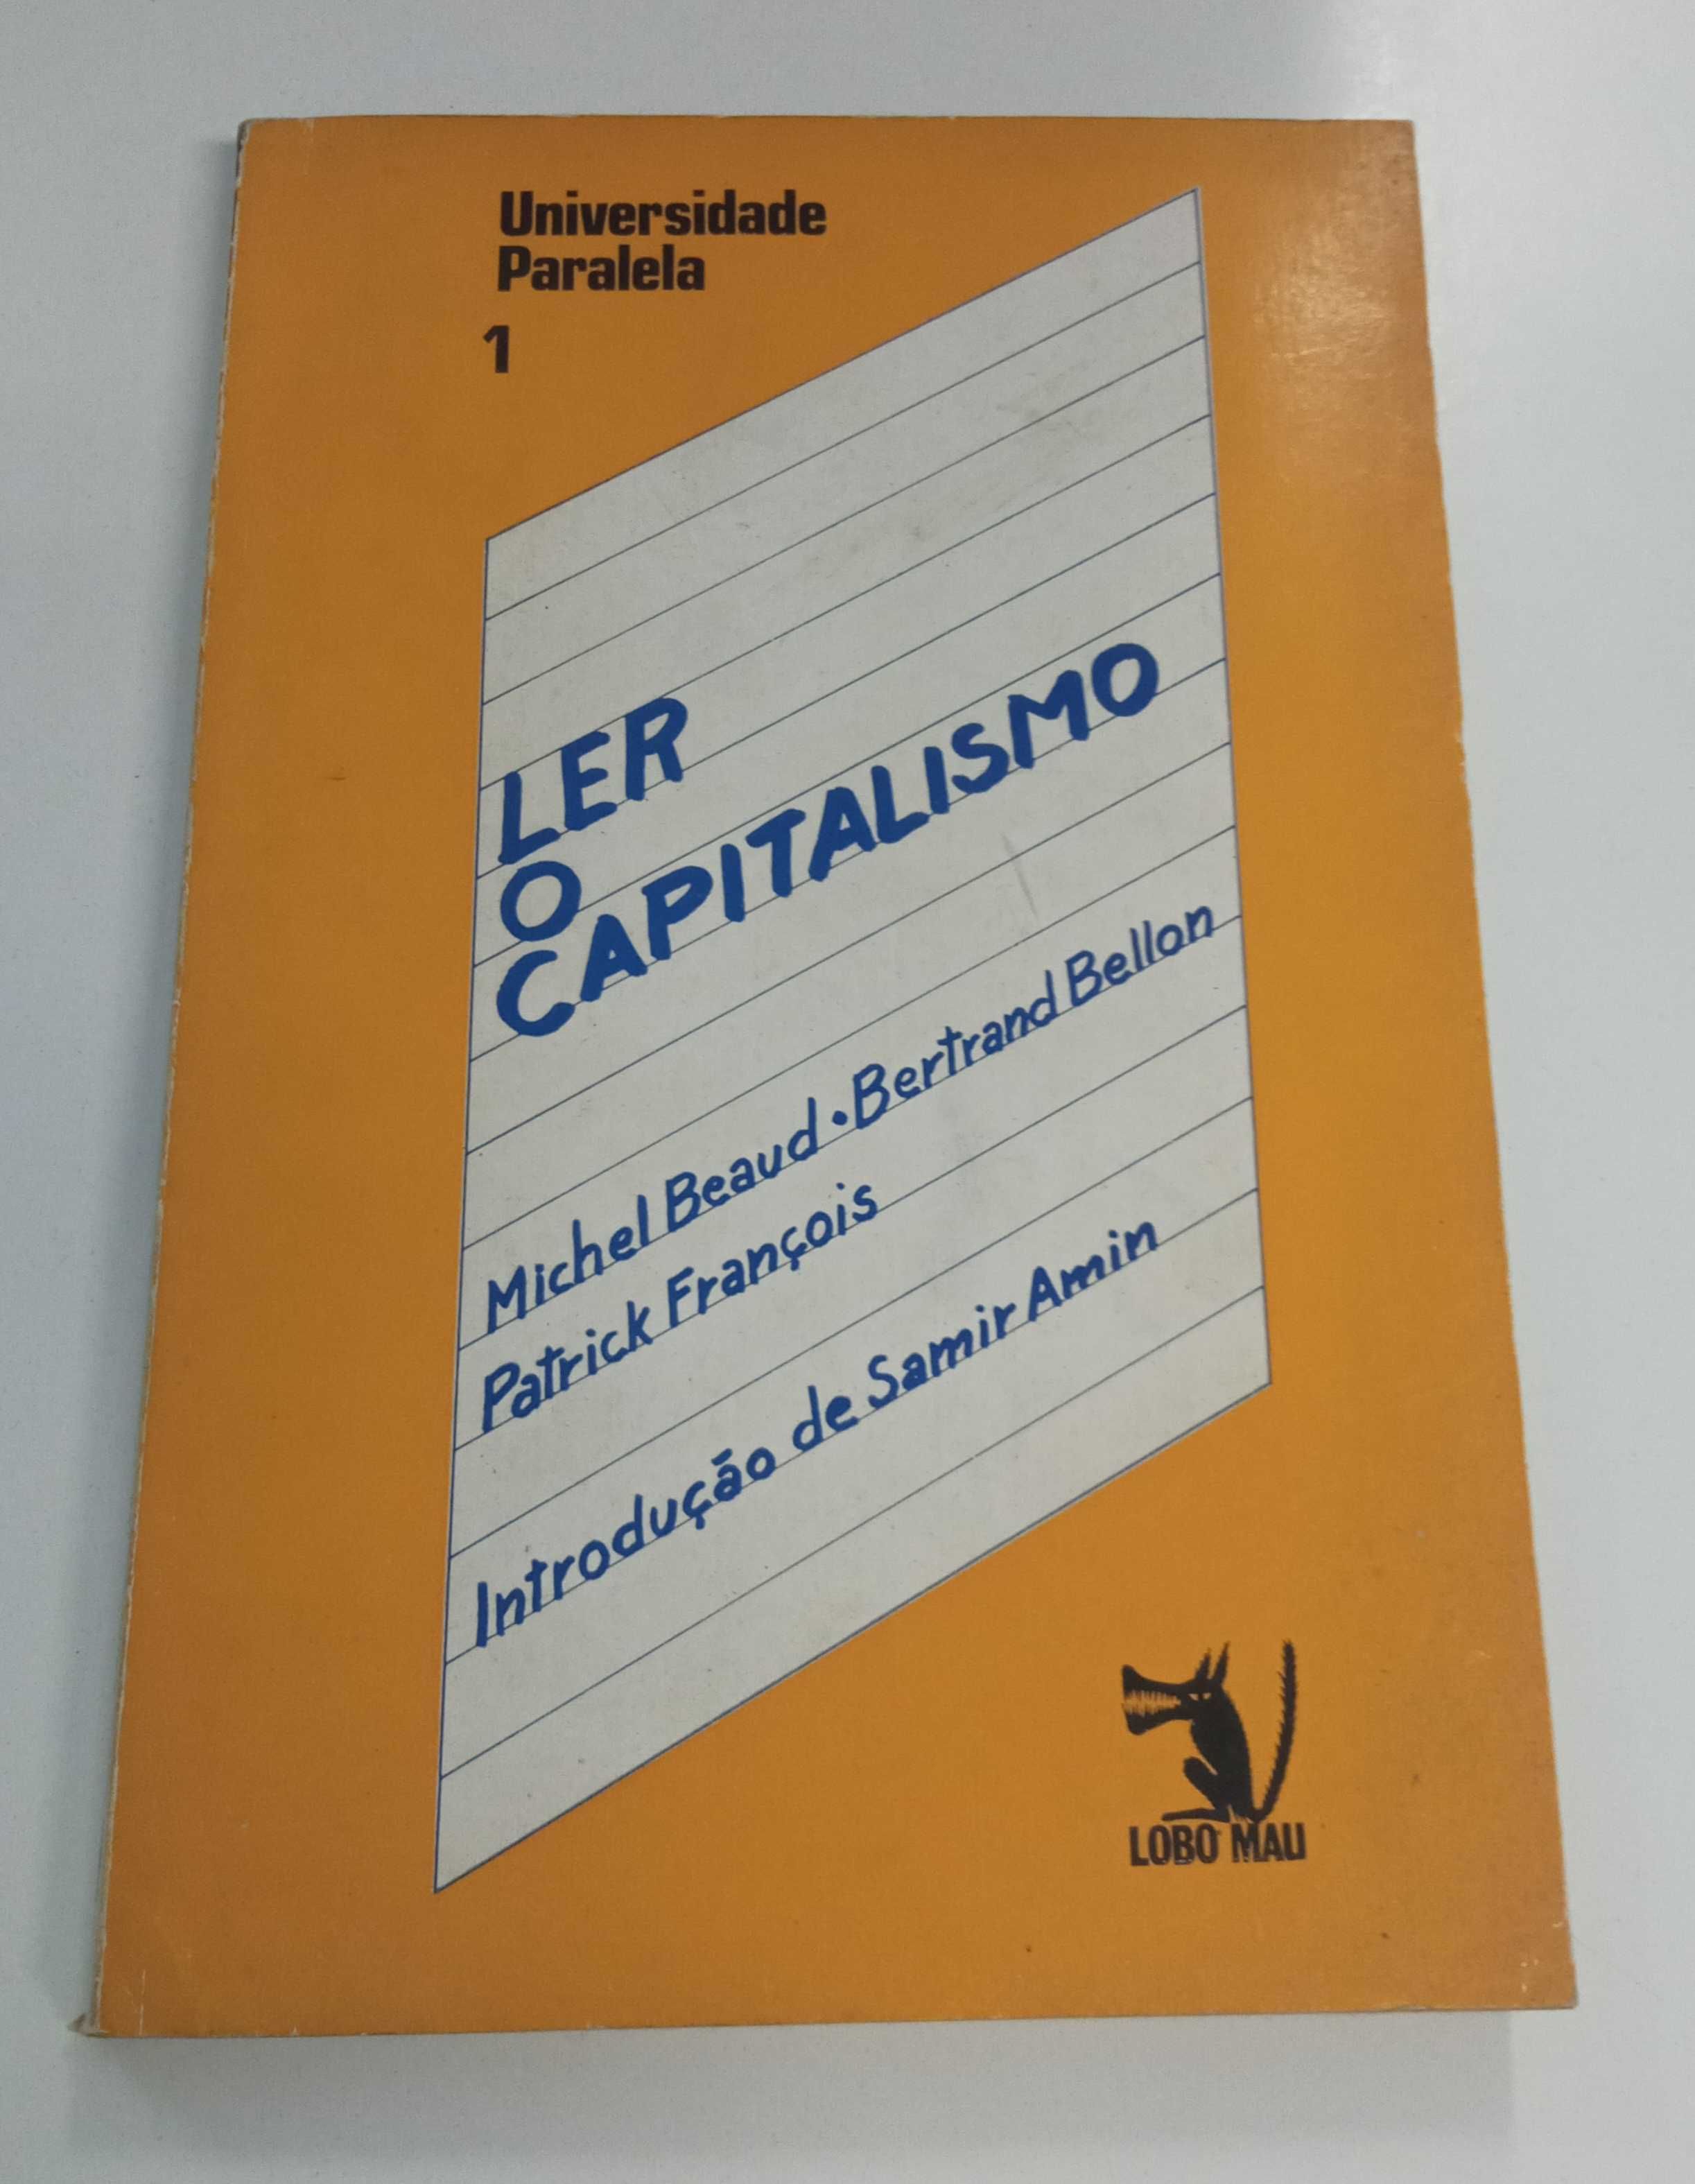 Ler o Capitalismo, de Michel Beaud